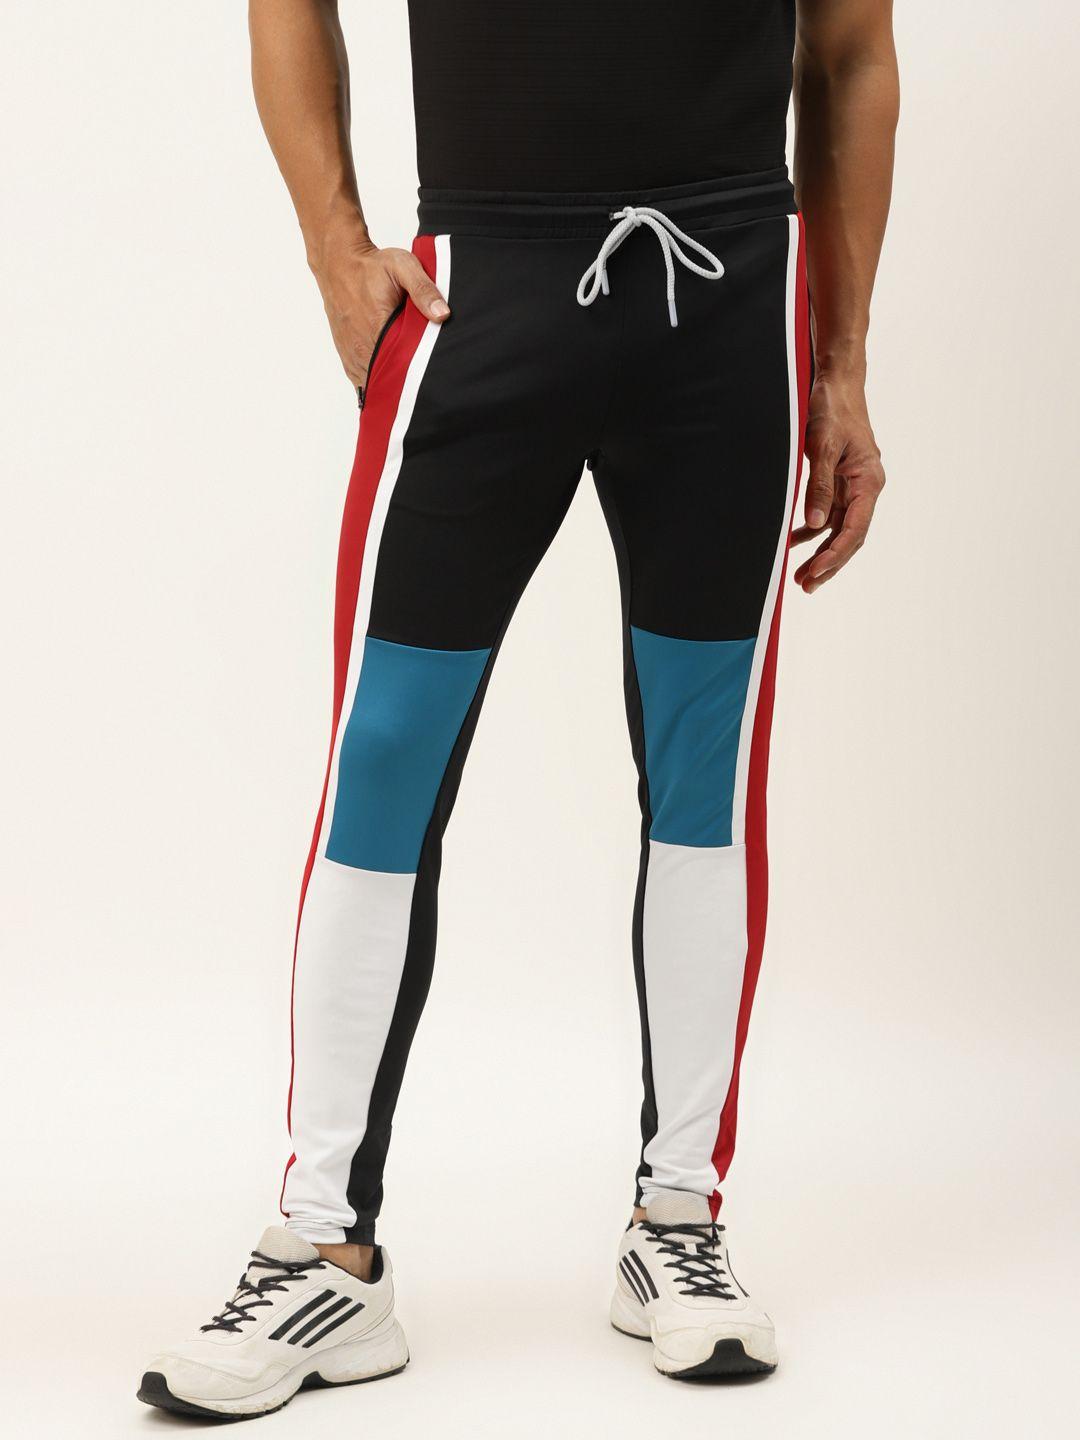 actoholic men black & white colourblocked track pants with striped detail